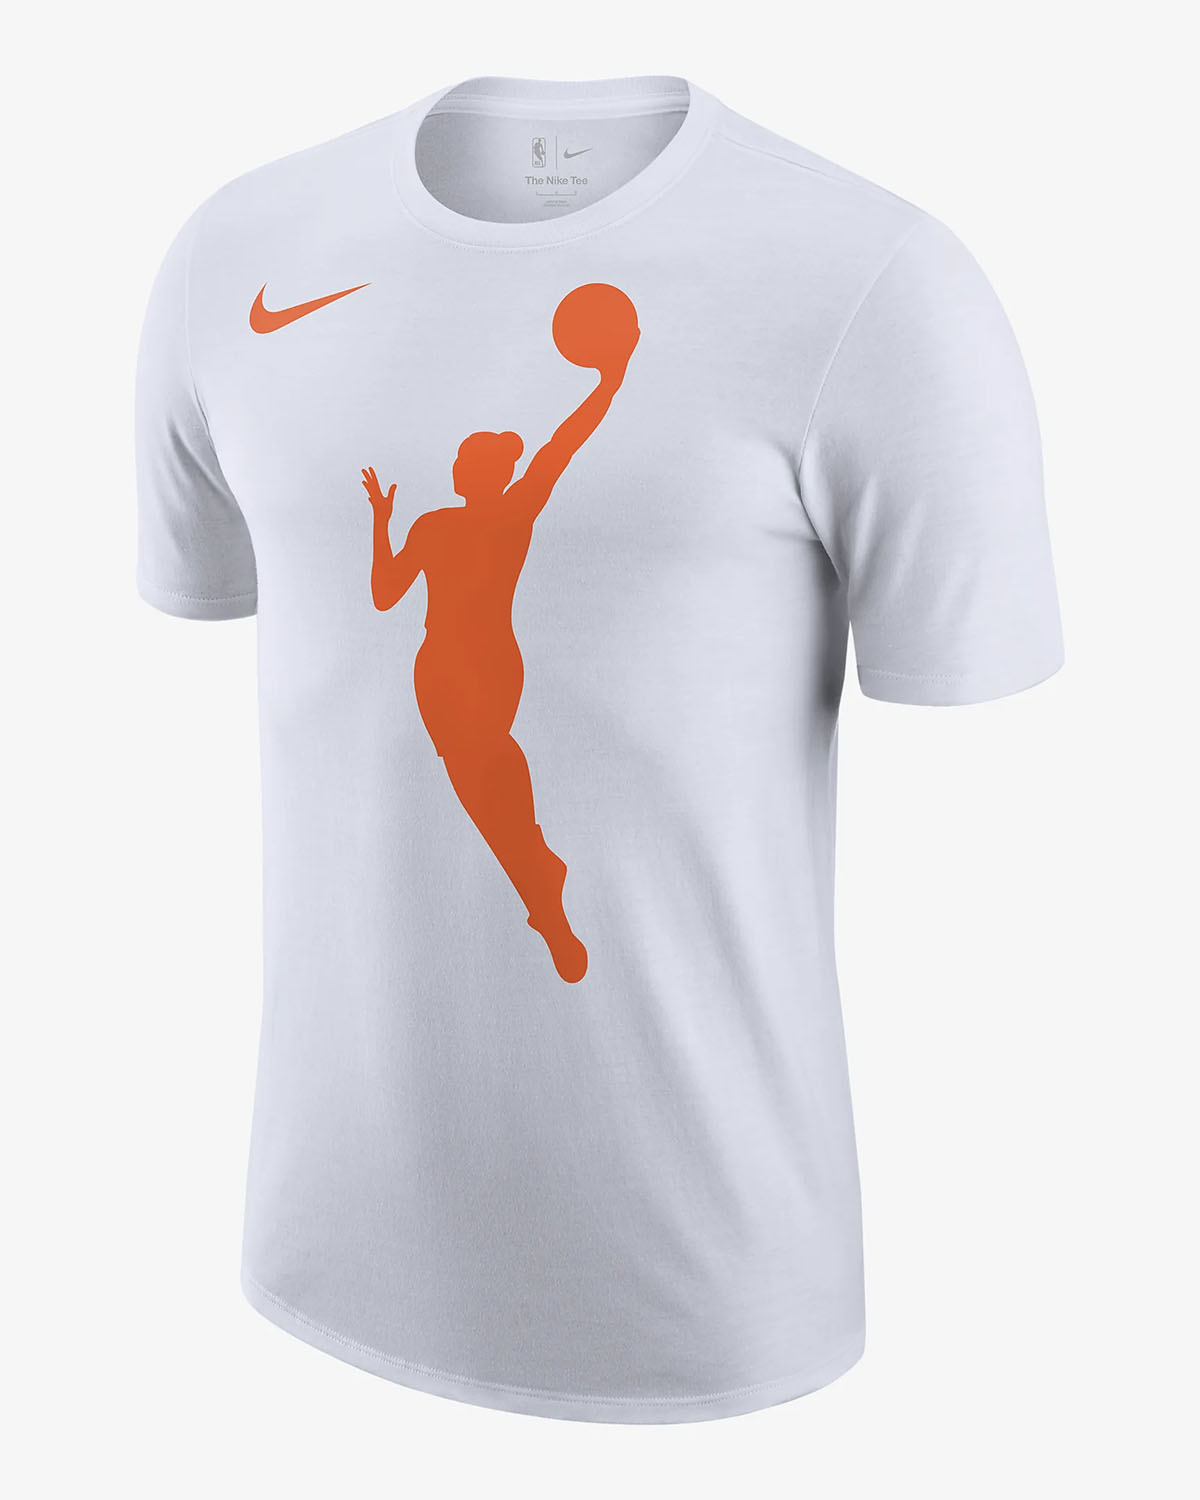 Nike WNBA T Shirt White Orange